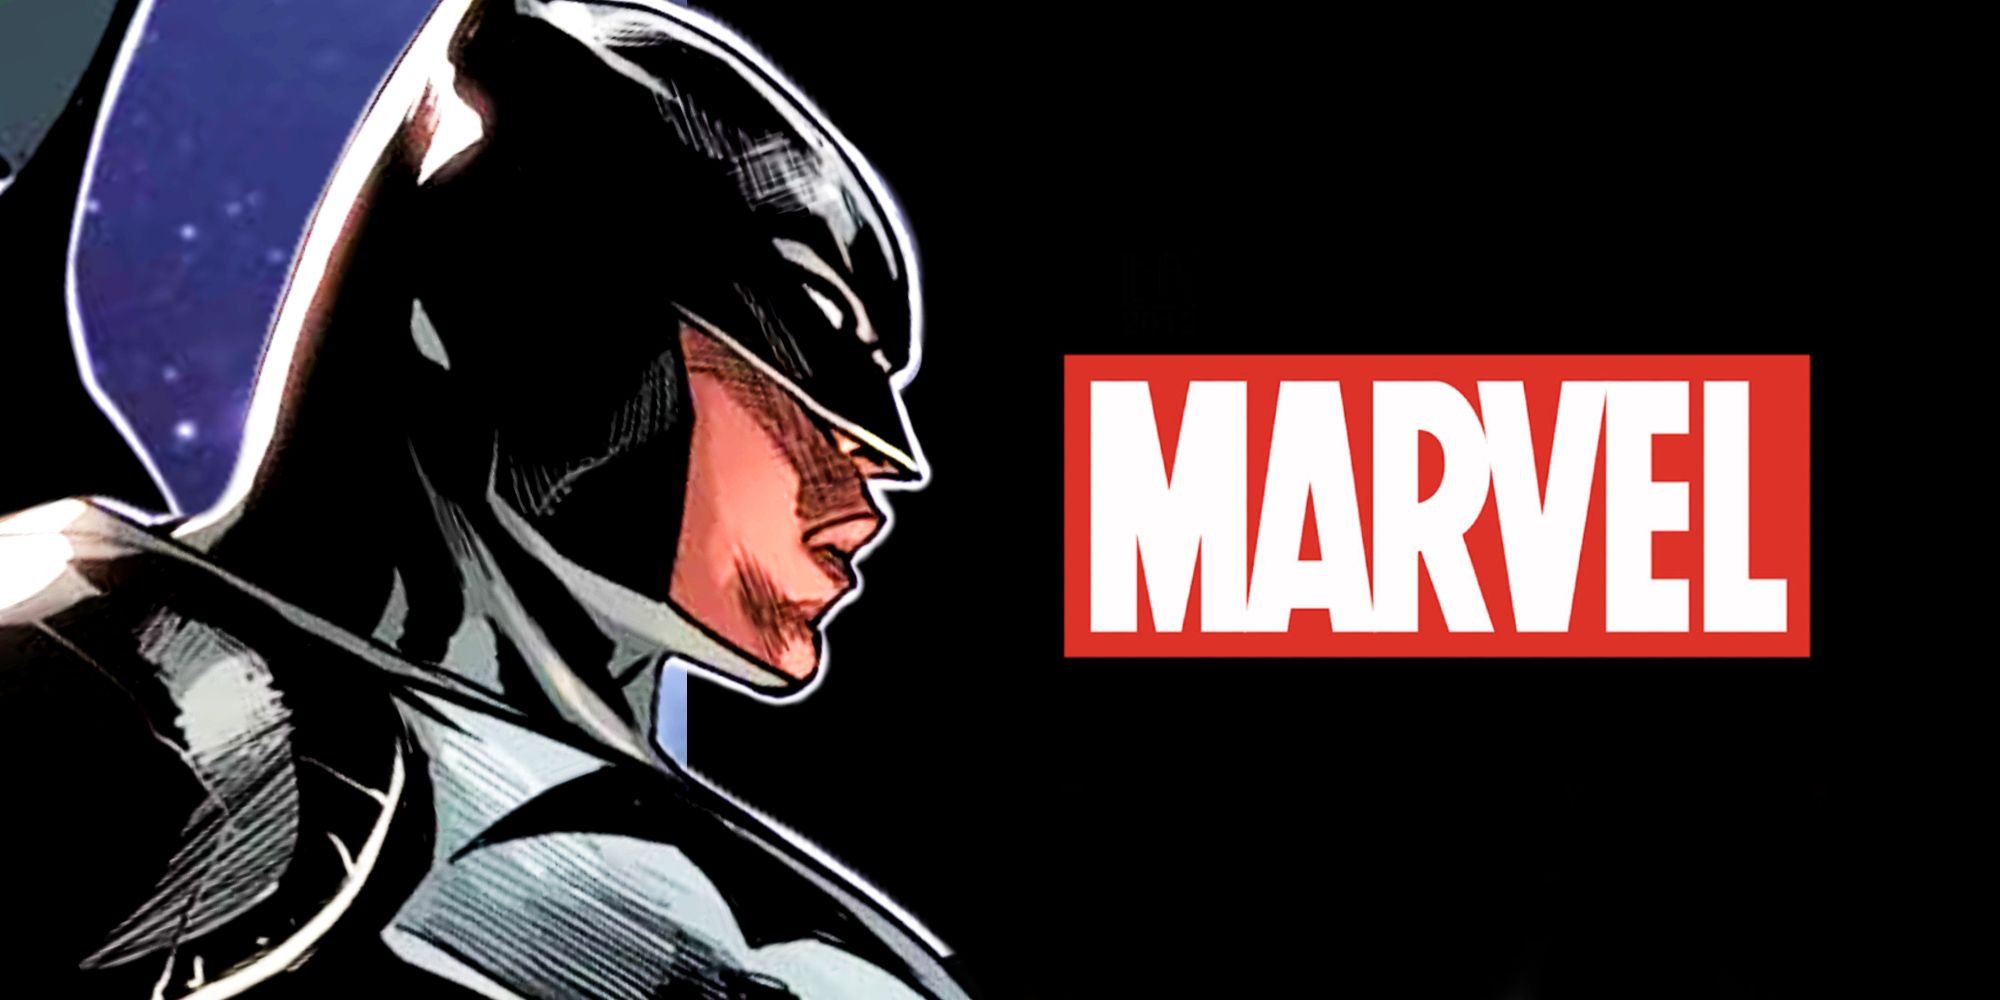 DC's Batman Stands Next to the Marvel Comics Logo